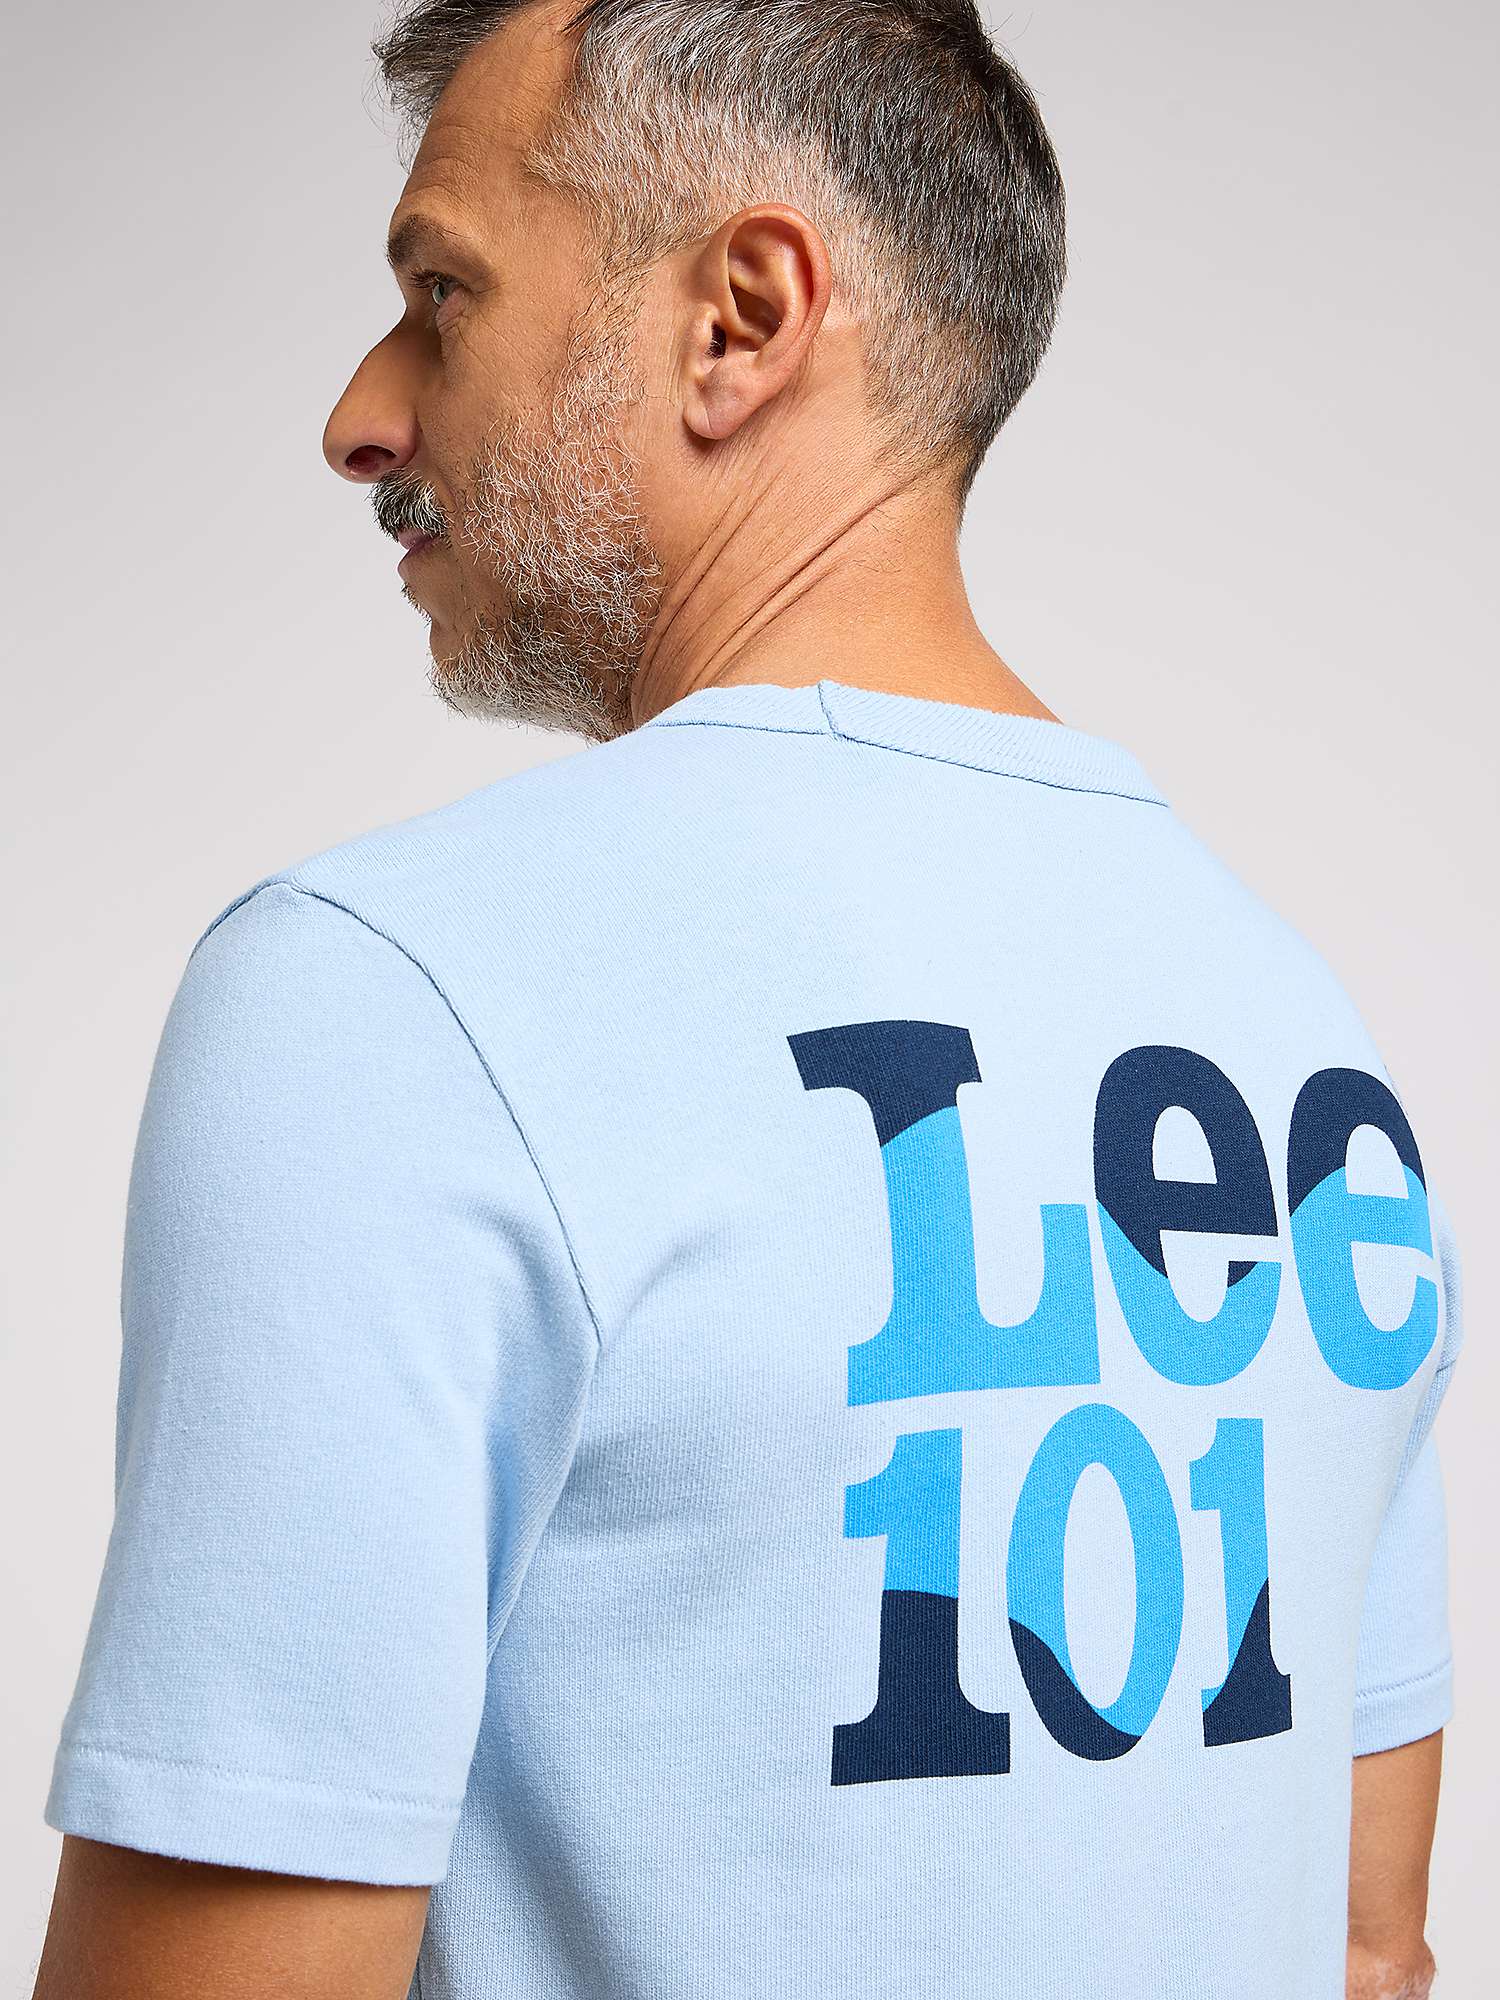 Buy Lee 101 Cotton T-Shirt, Light Blue Online at johnlewis.com